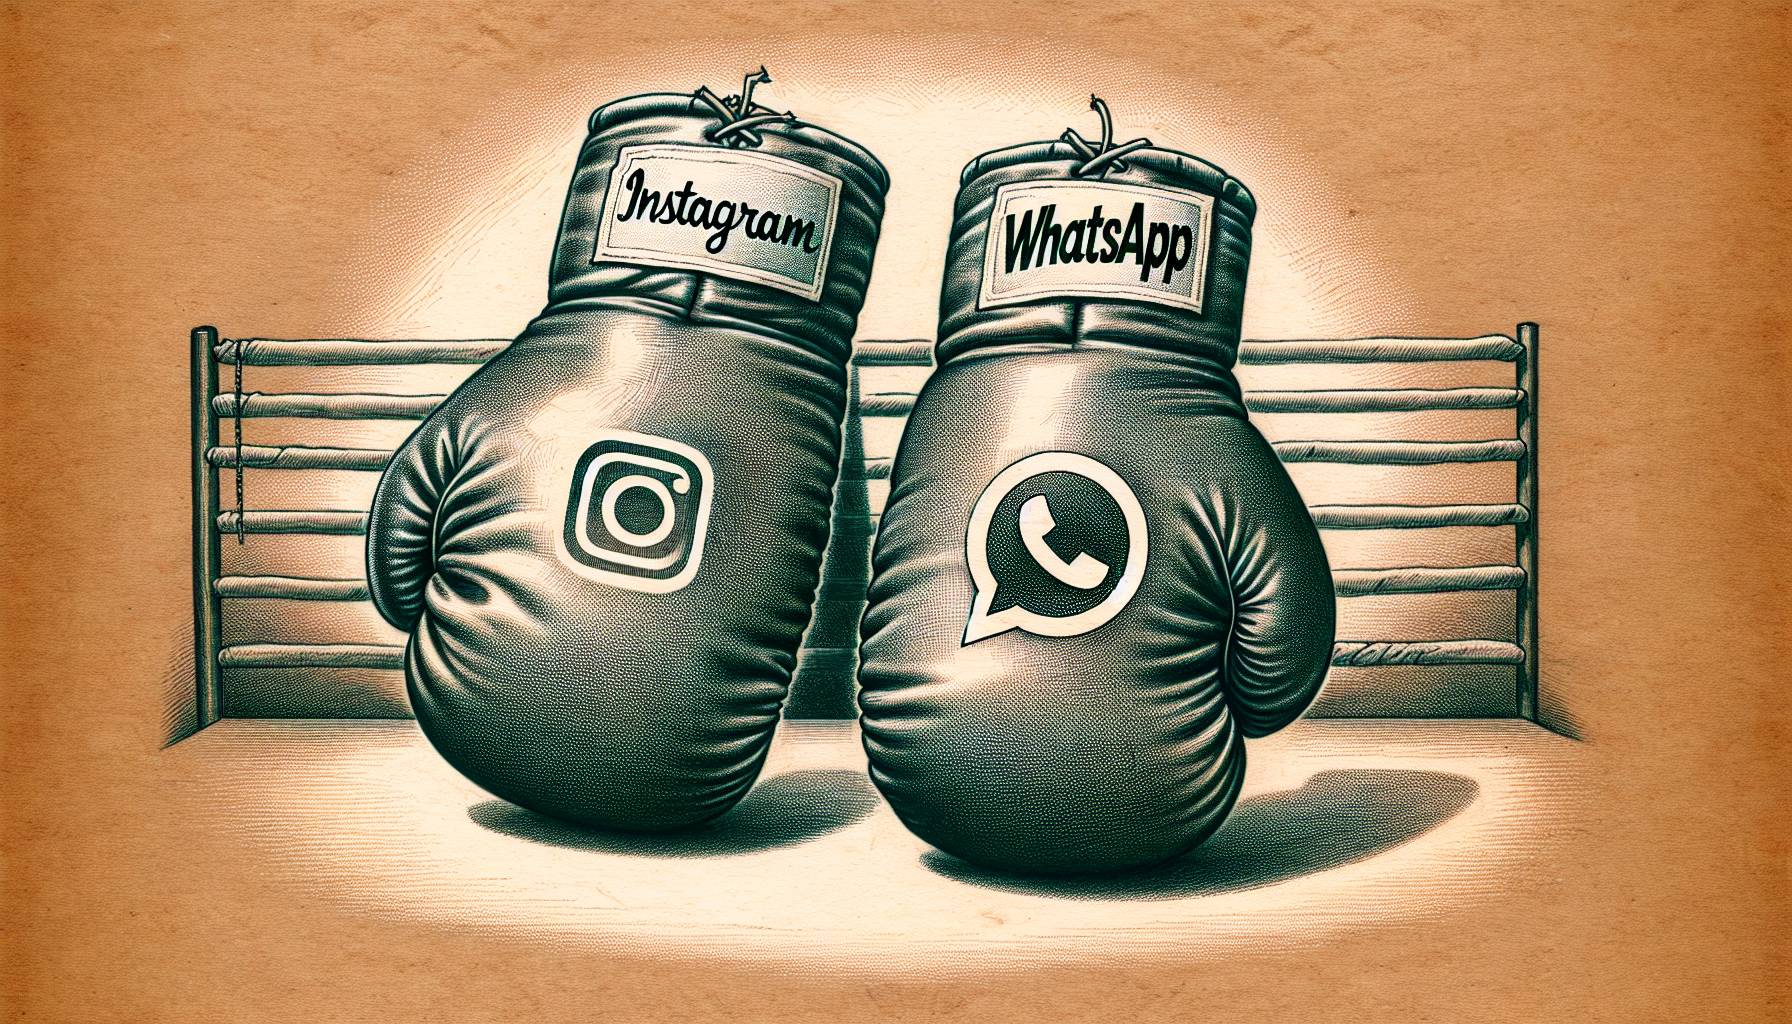 "Instagram WhatsApp Duel"